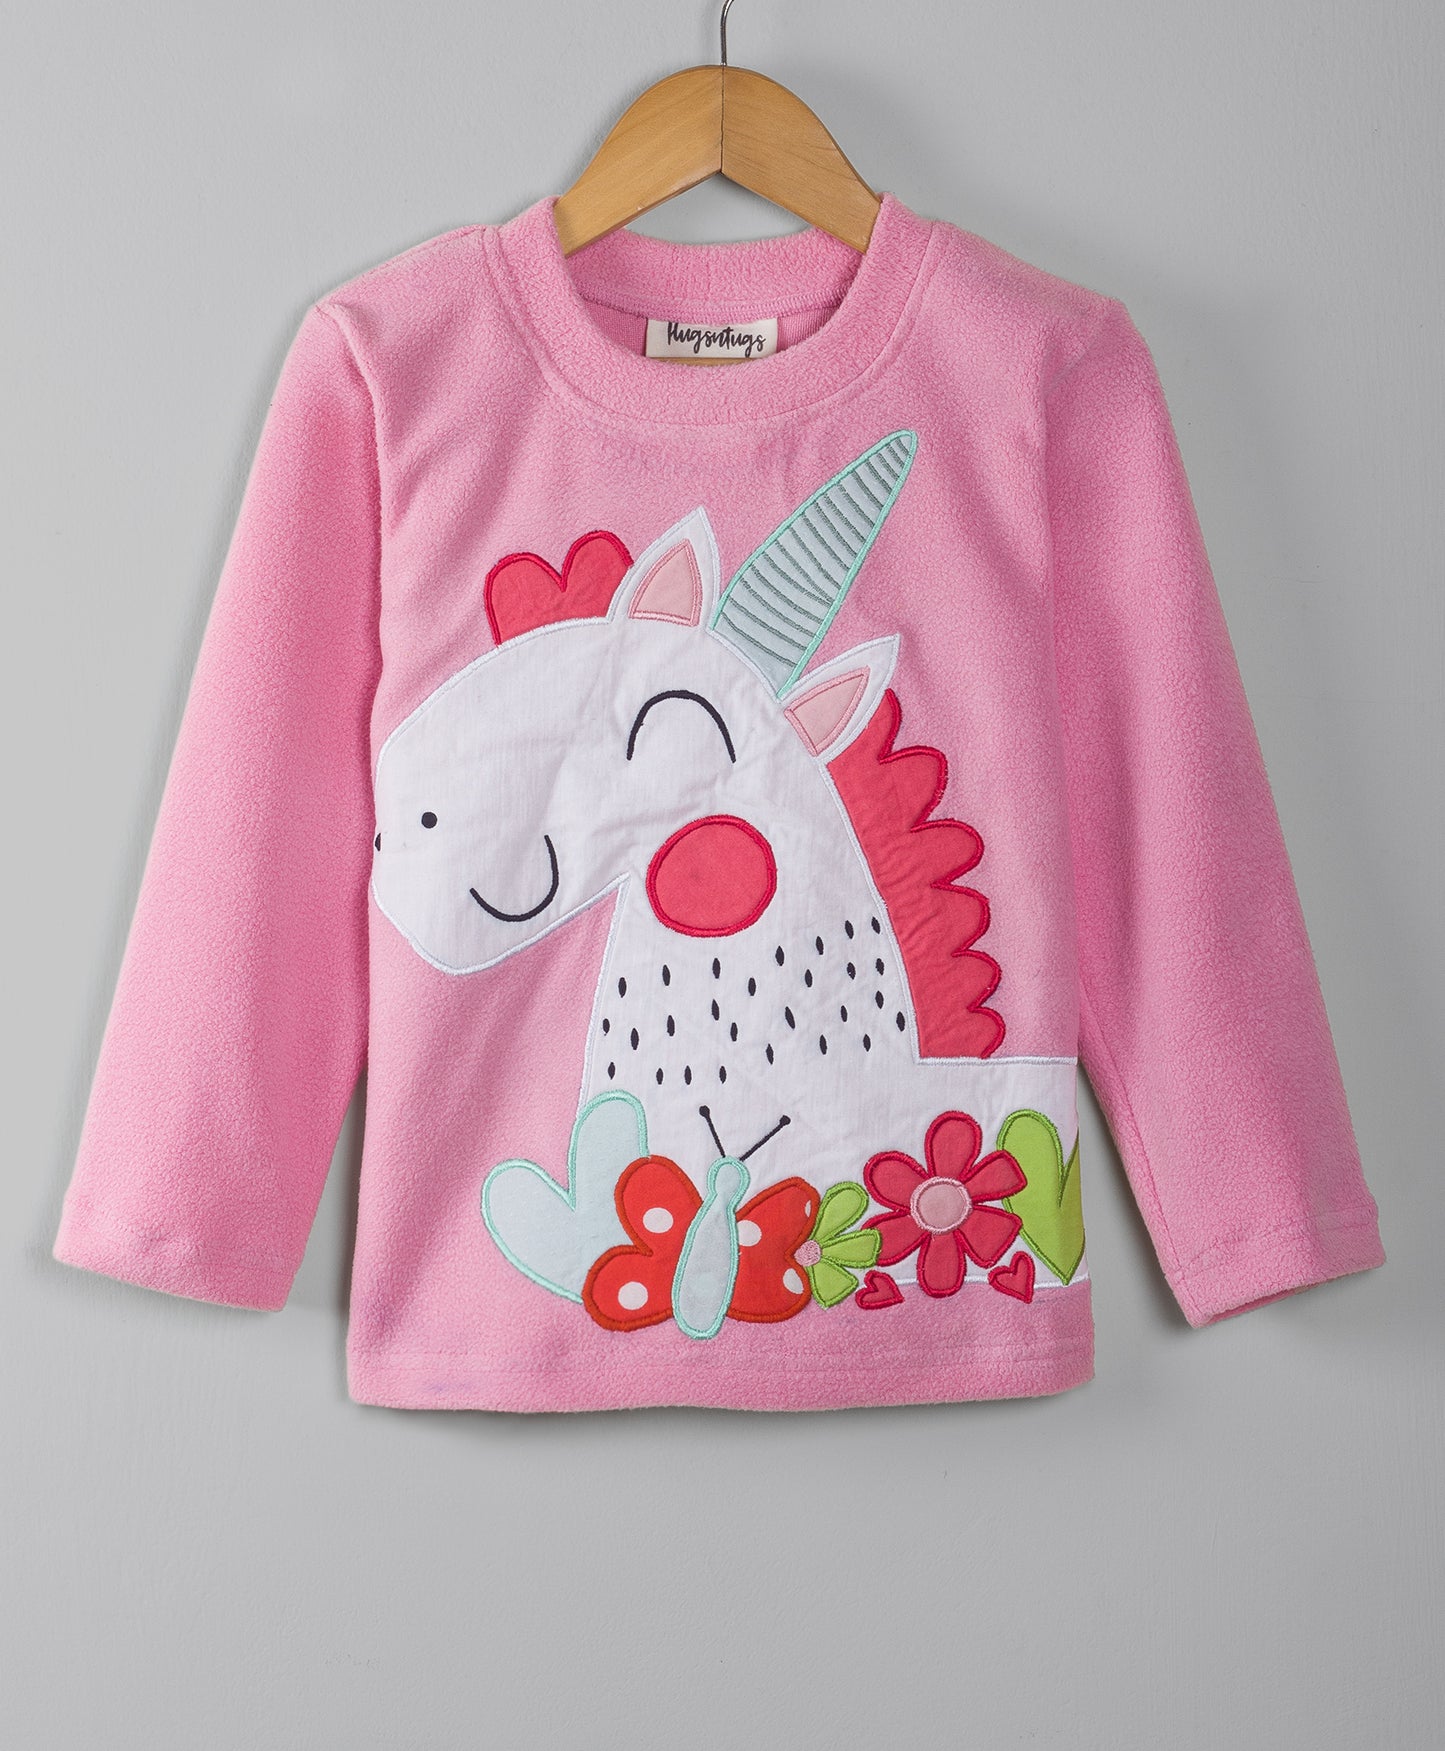 Unicorn patch pink fleece set